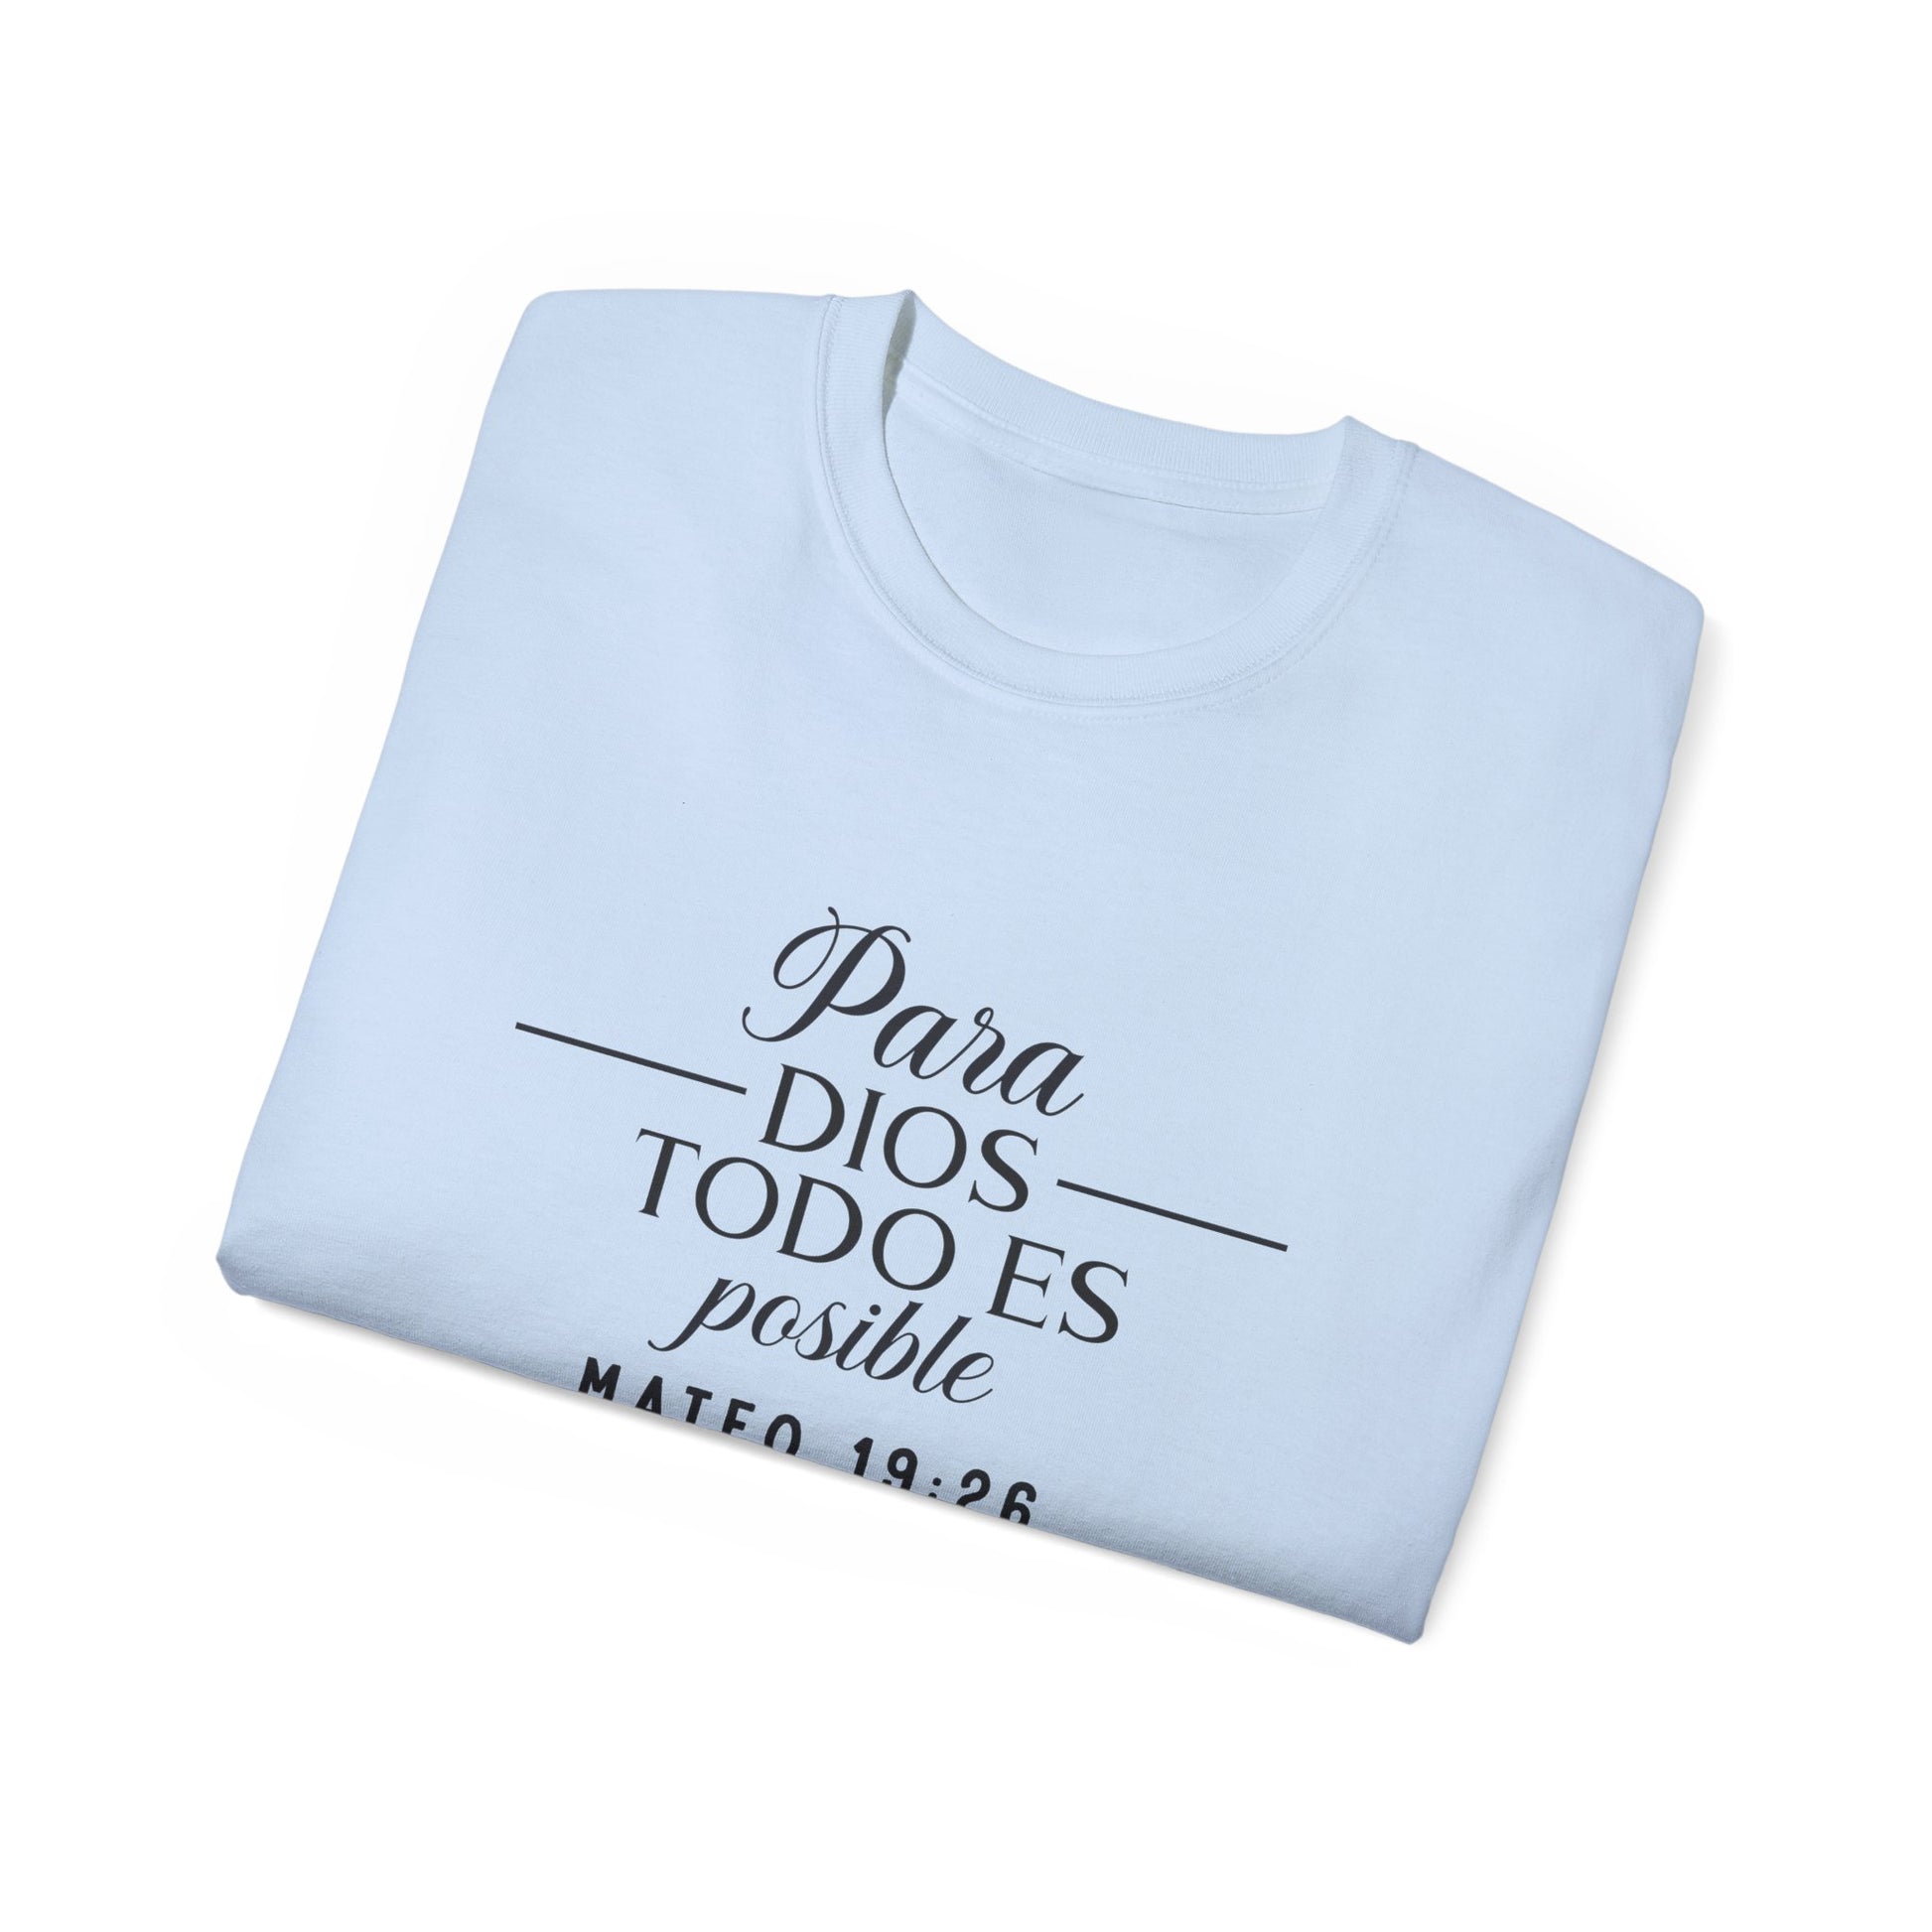 Para Dios Todo Es Posible Christian Spanish Unisex T-shirt Printify